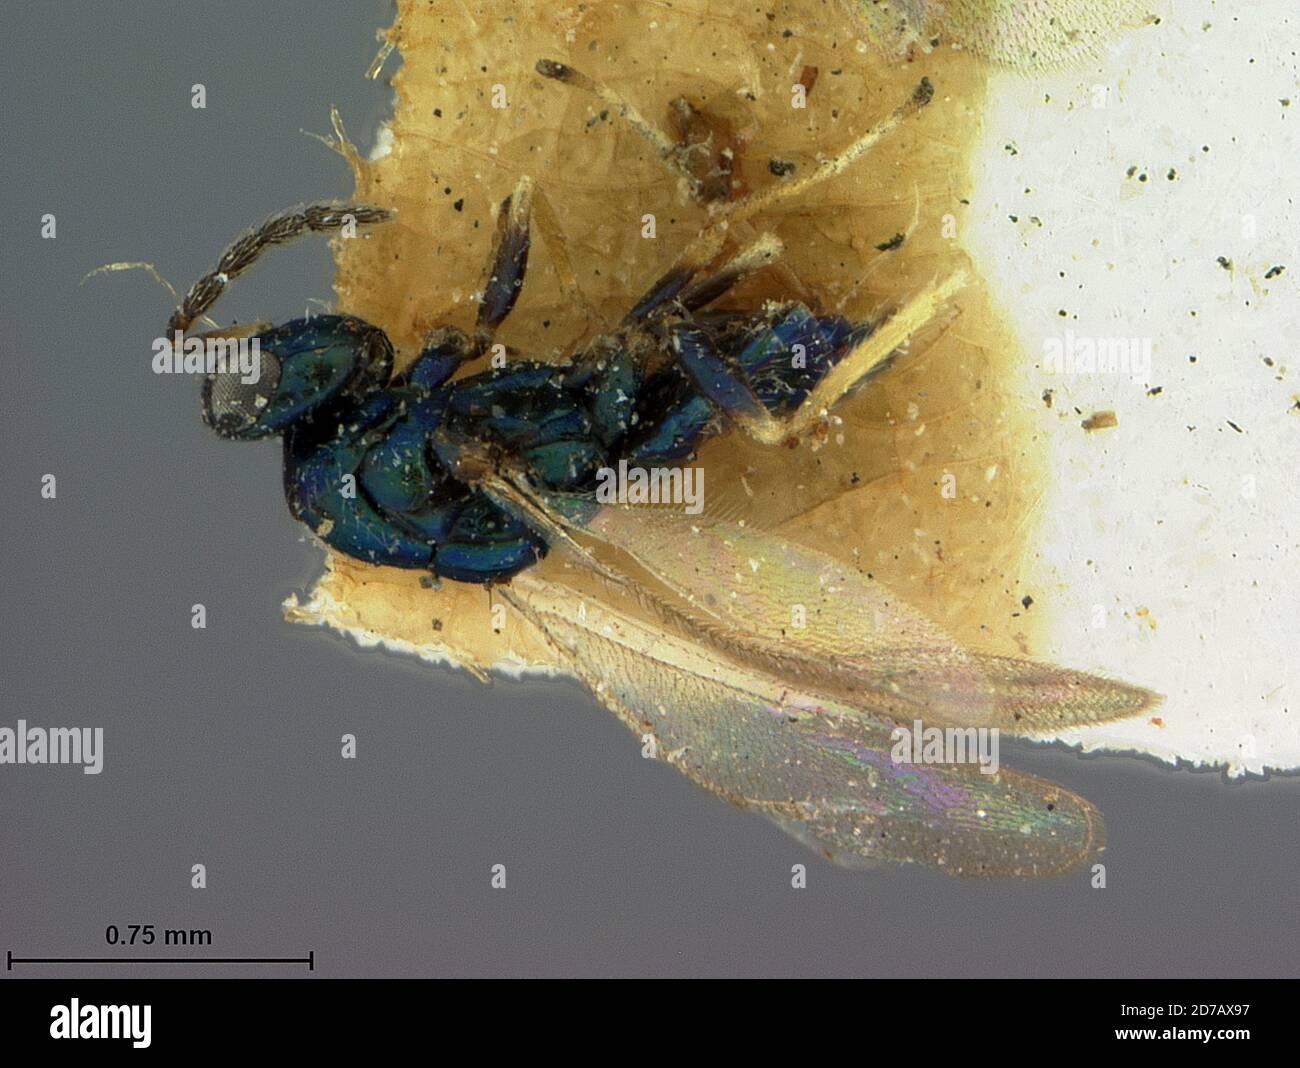 Canada, Hyperteles hylotomae Ashmead, 1888, Animalia, Arthropoda, Insecta, Hymenoptera, Eulophidae Stock Photo